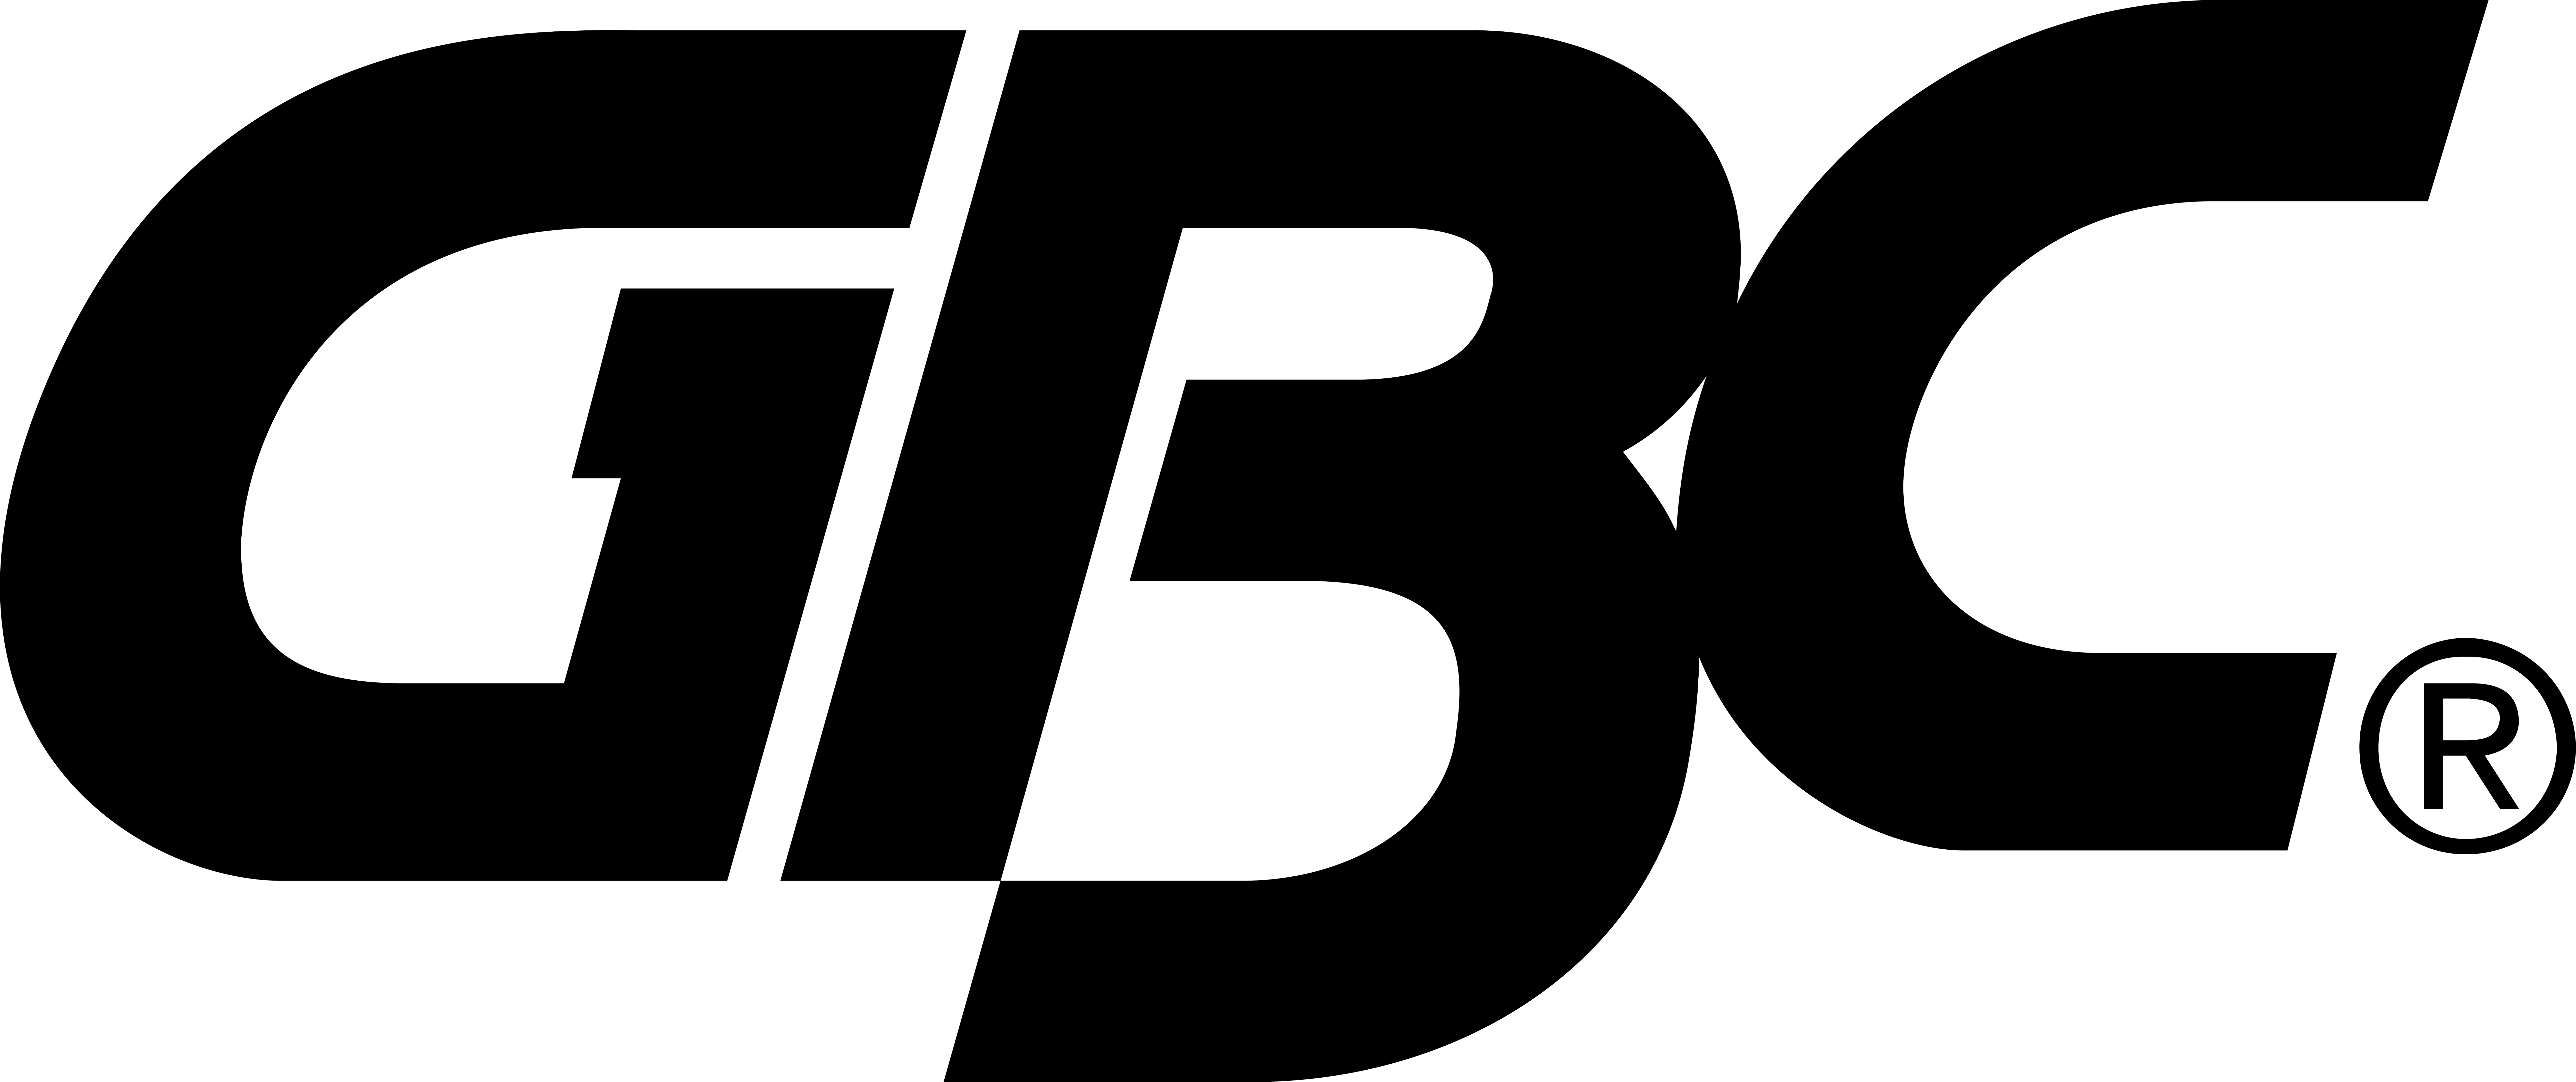 gbc logo from BindRite